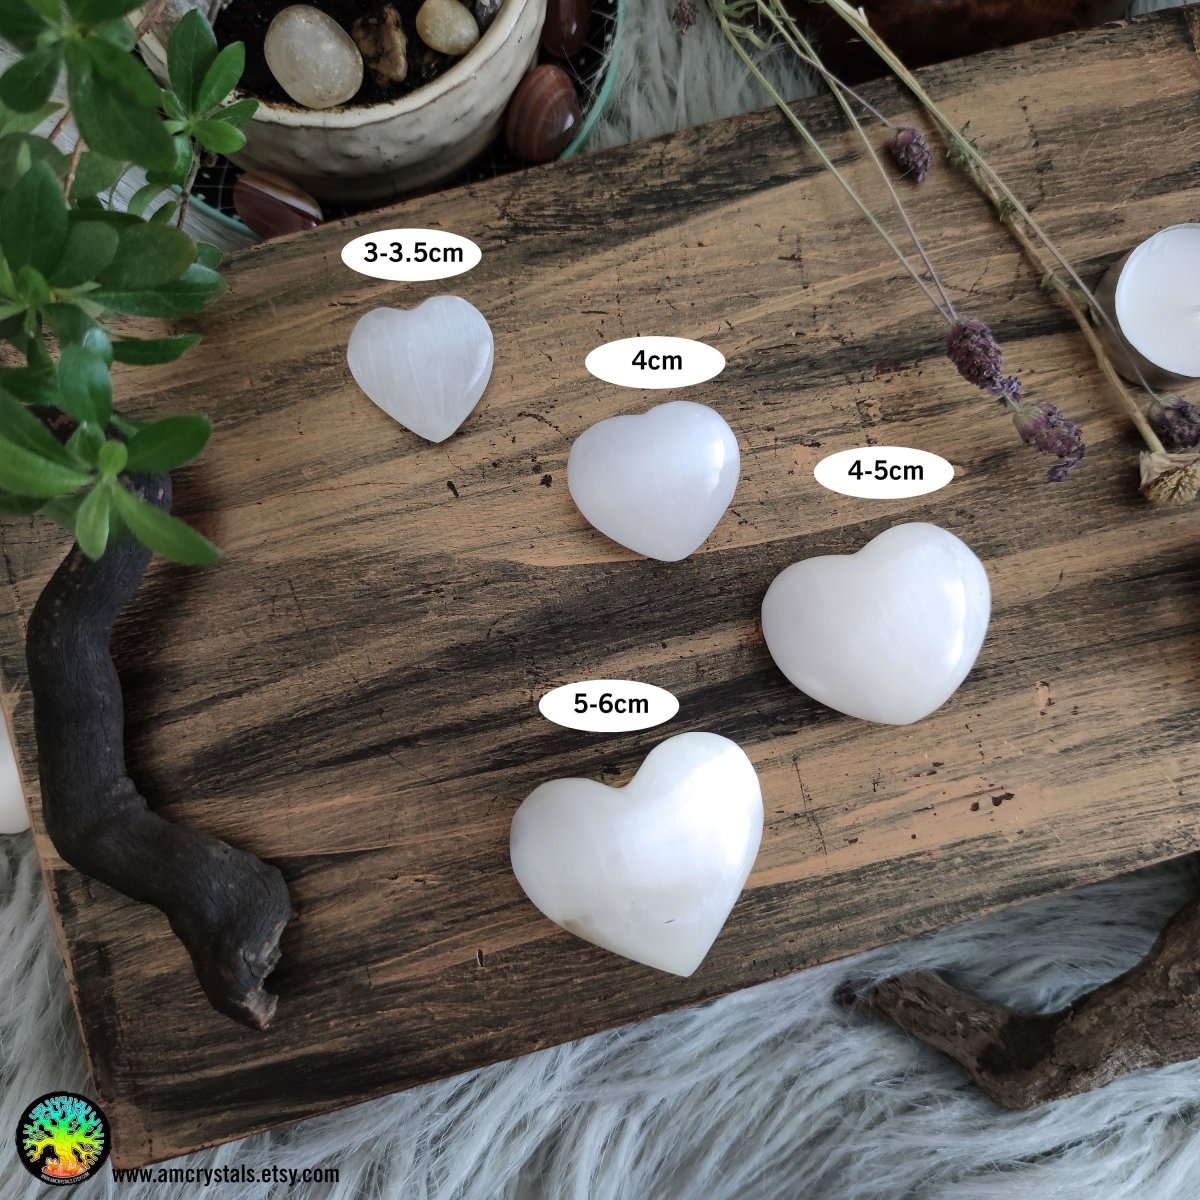 Gezwollen 4-5 cm seleniet hartpalmsteen - Anima Mundi-kristallen